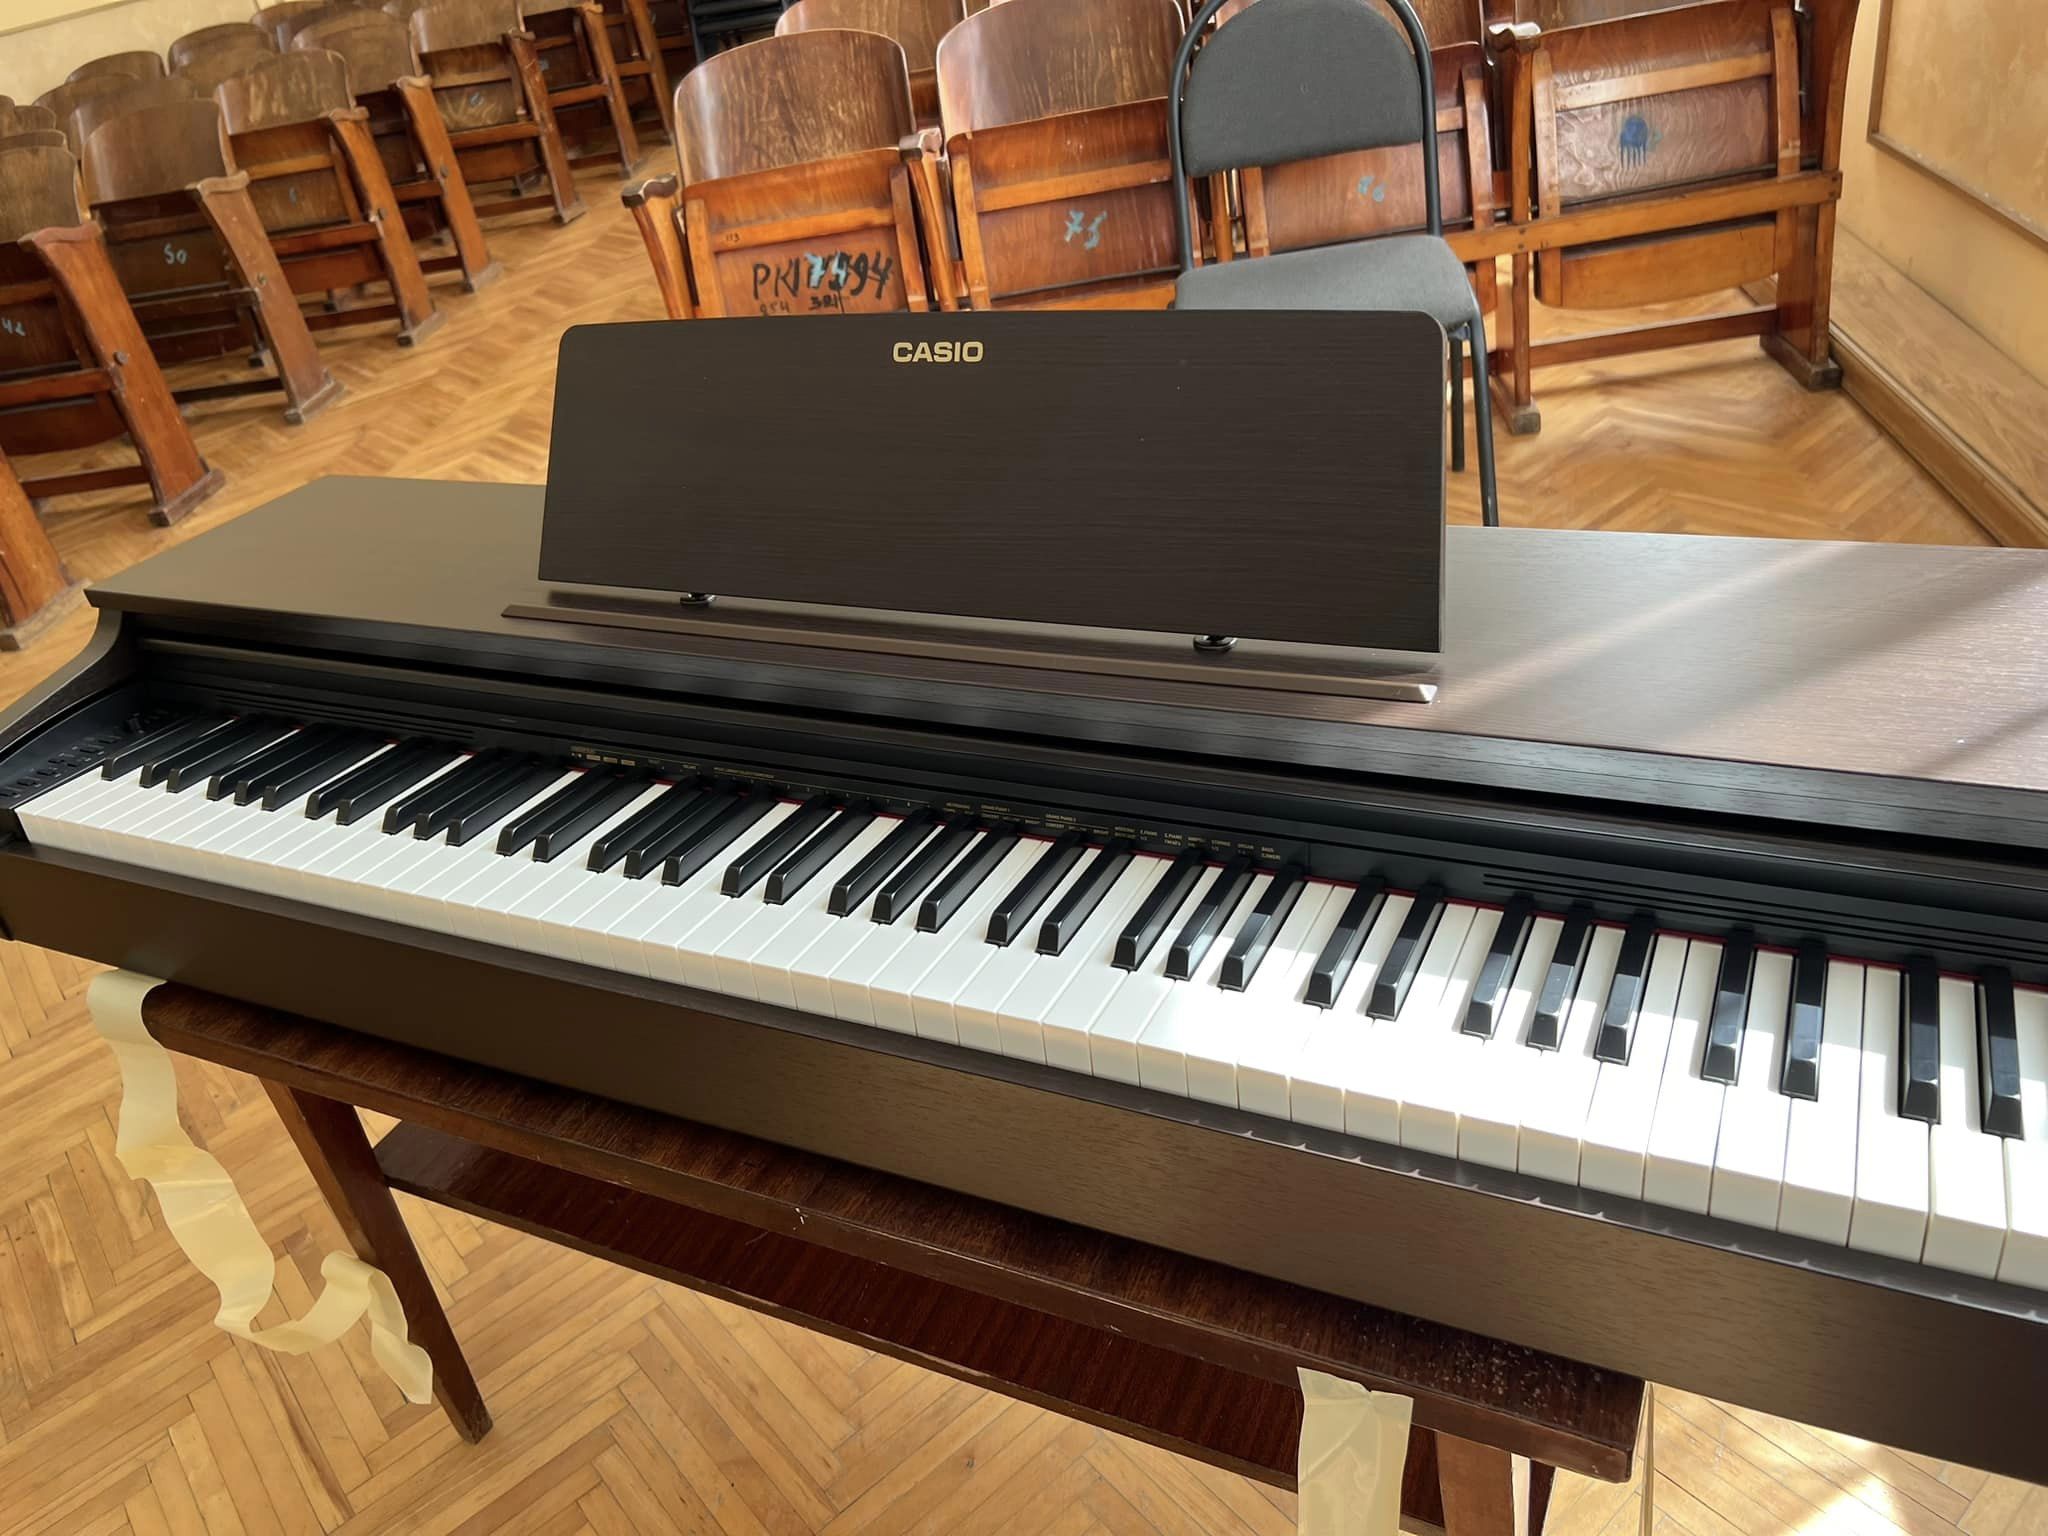 Калуська музична школа отримала цифрове фортепіано Casio (ФОТО)